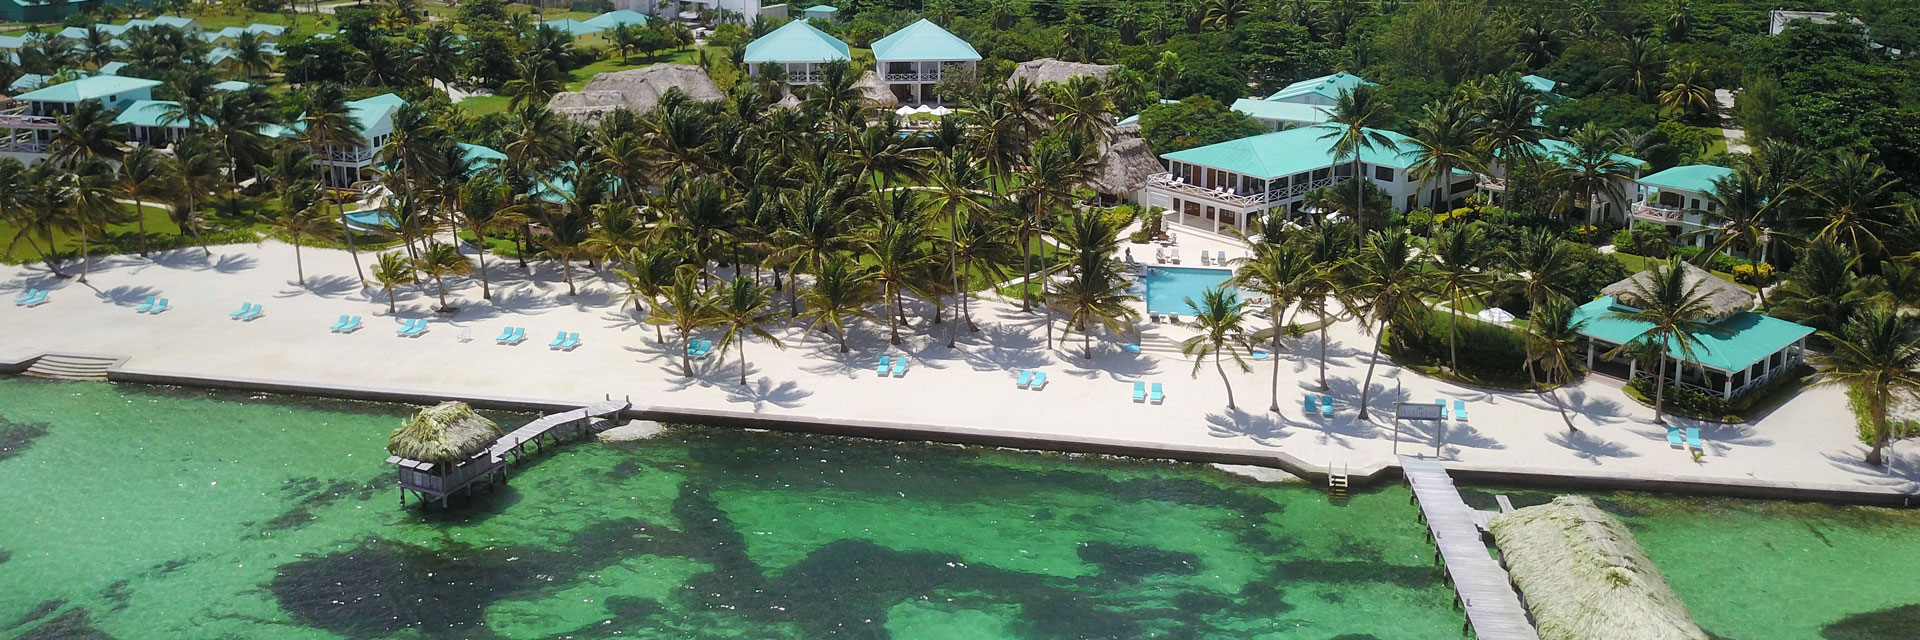 Aerial View of Caribbean Islands